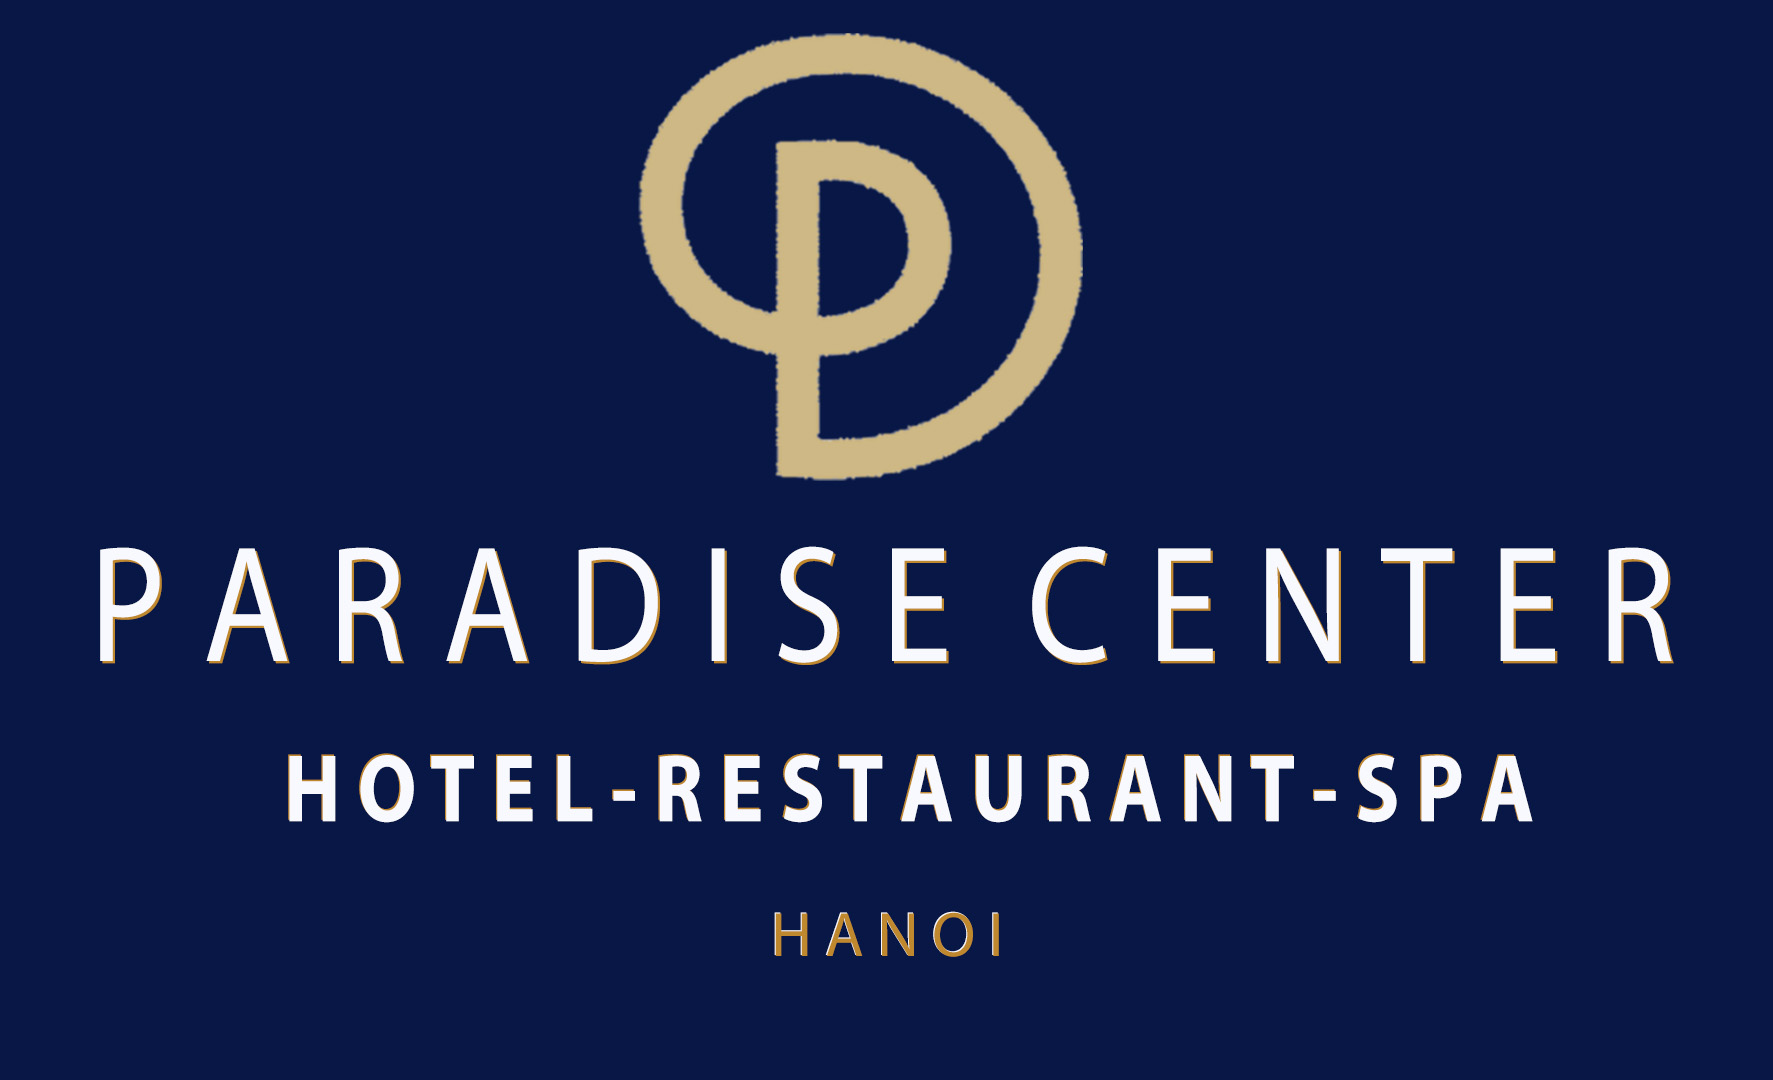 Hanoi Paradise Center